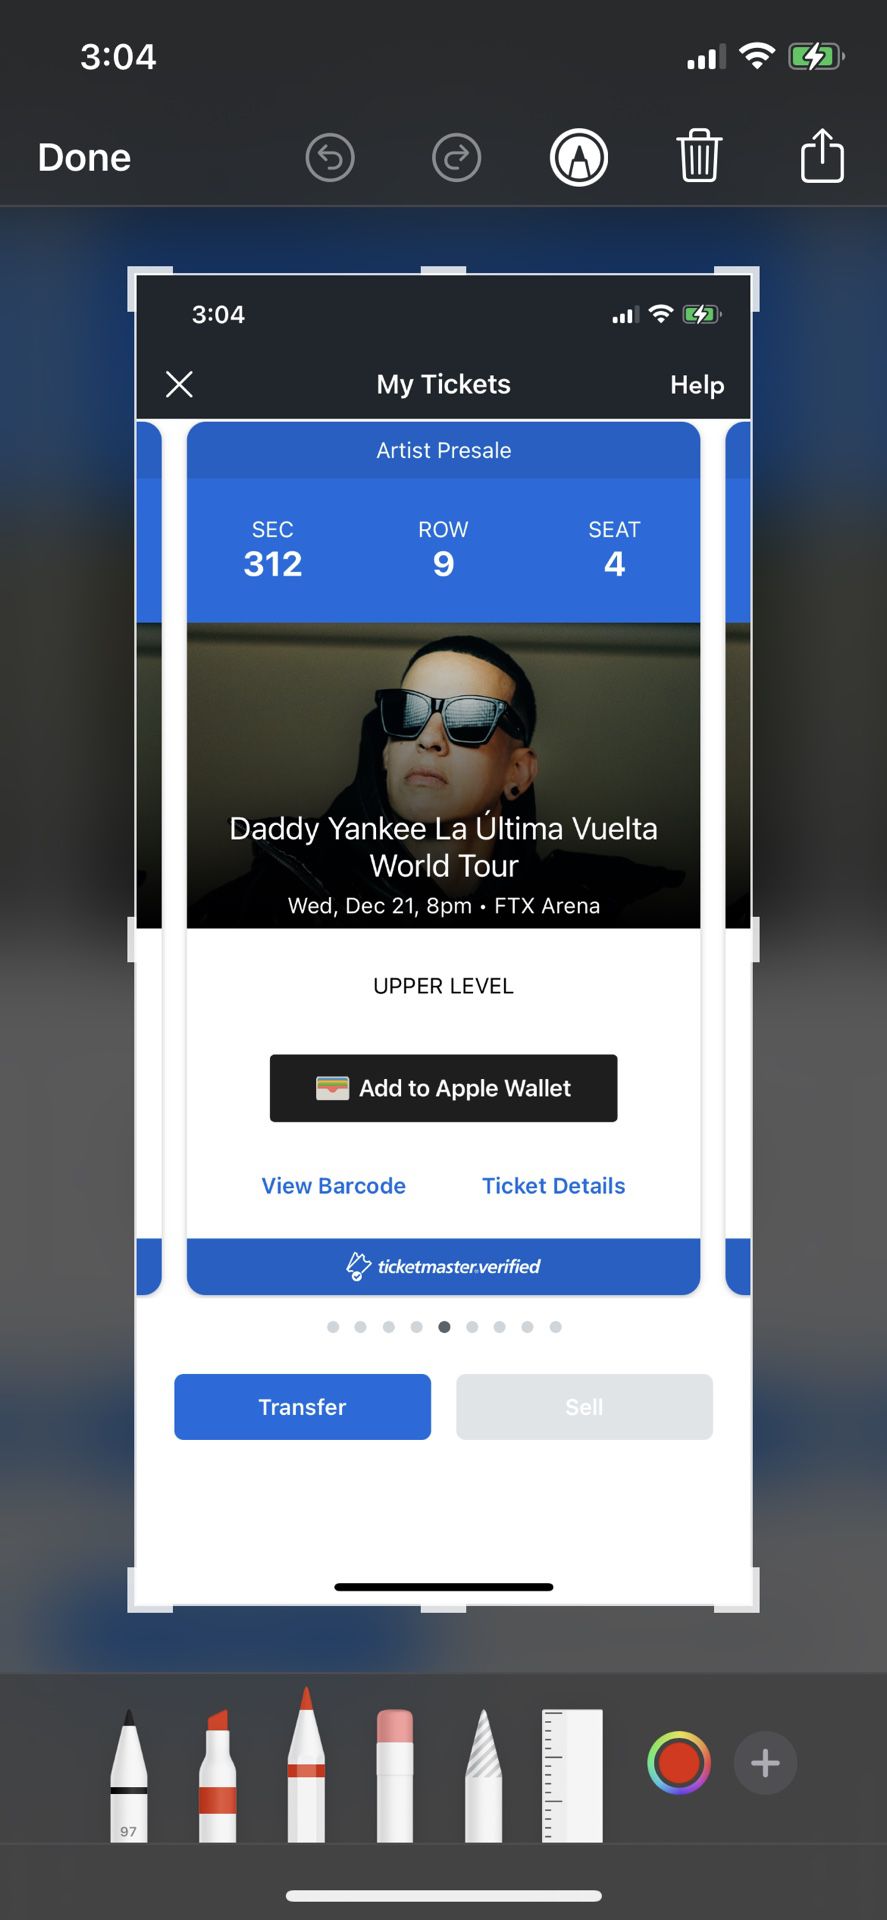 Daddy Yankee La Ultima Vuelta -Dec 21 Miami